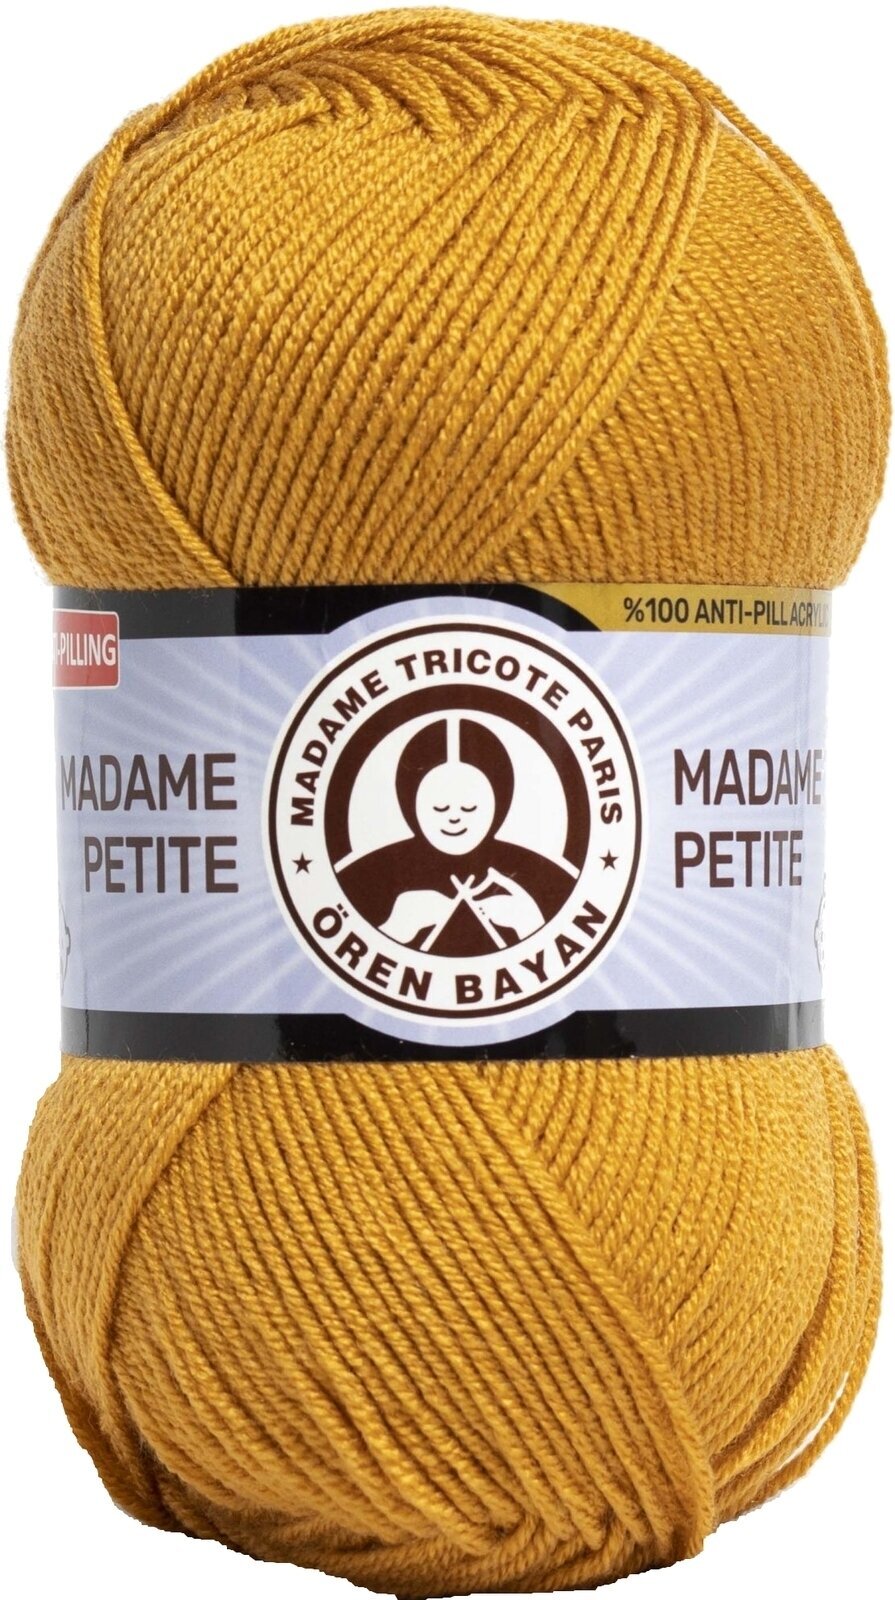 Knitting Yarn Madame Tricote Paris Madame Petite 3848 115 Knitting Yarn